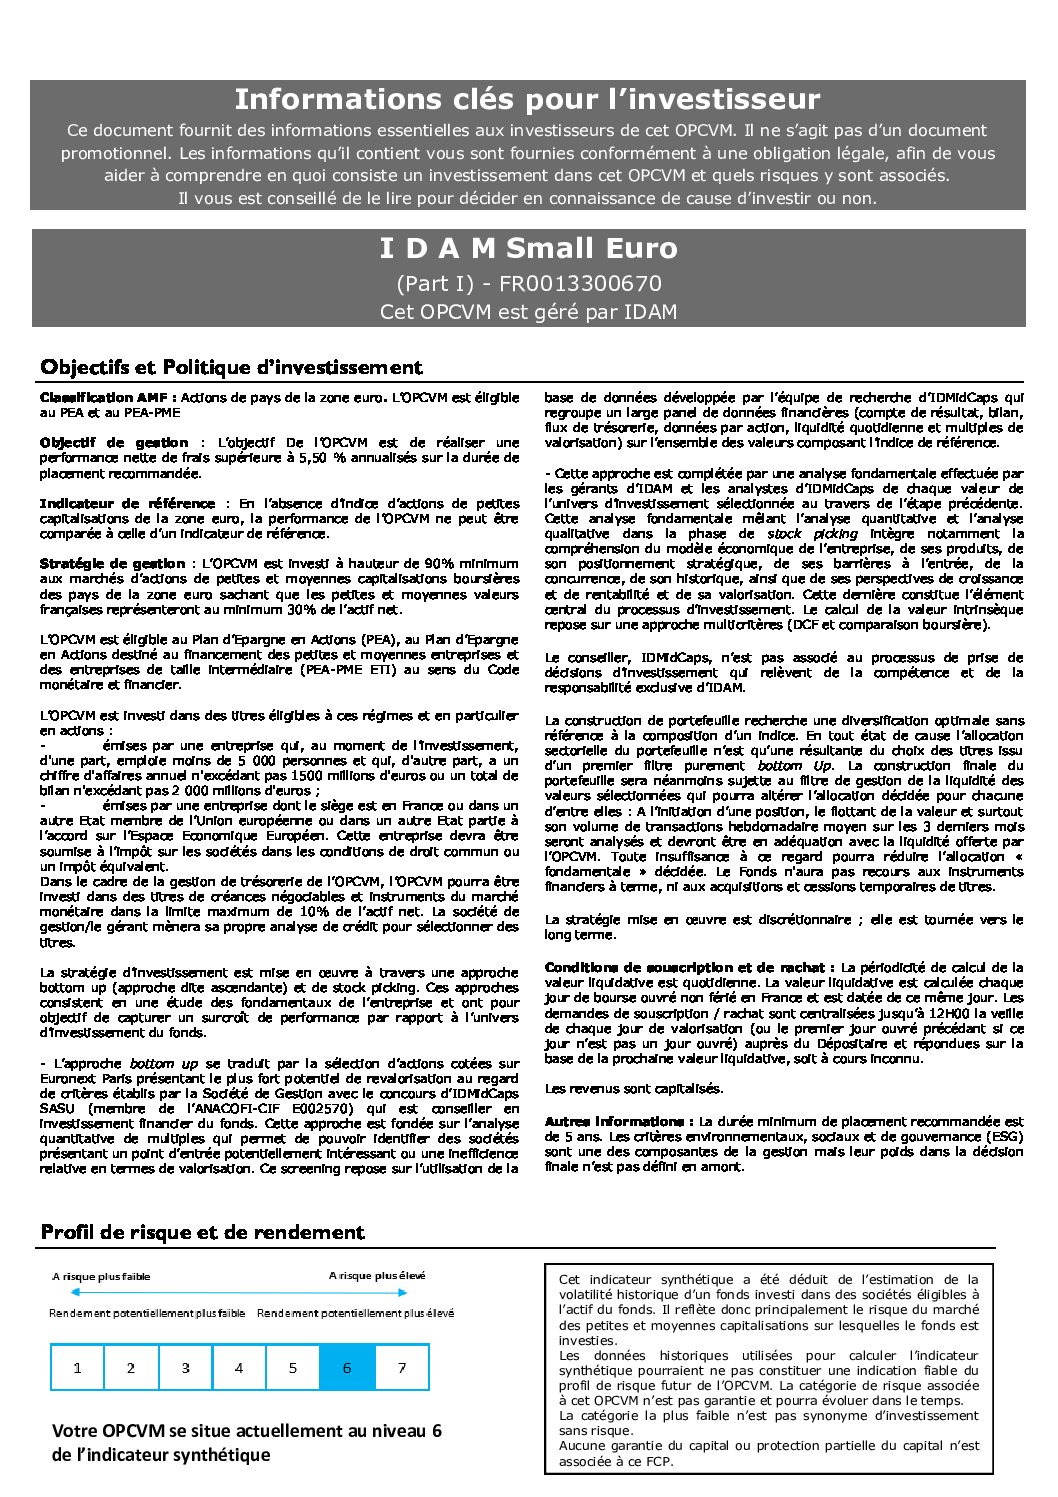 DICI-Part-I-IDAM-SMALL-EURO-3-pdf